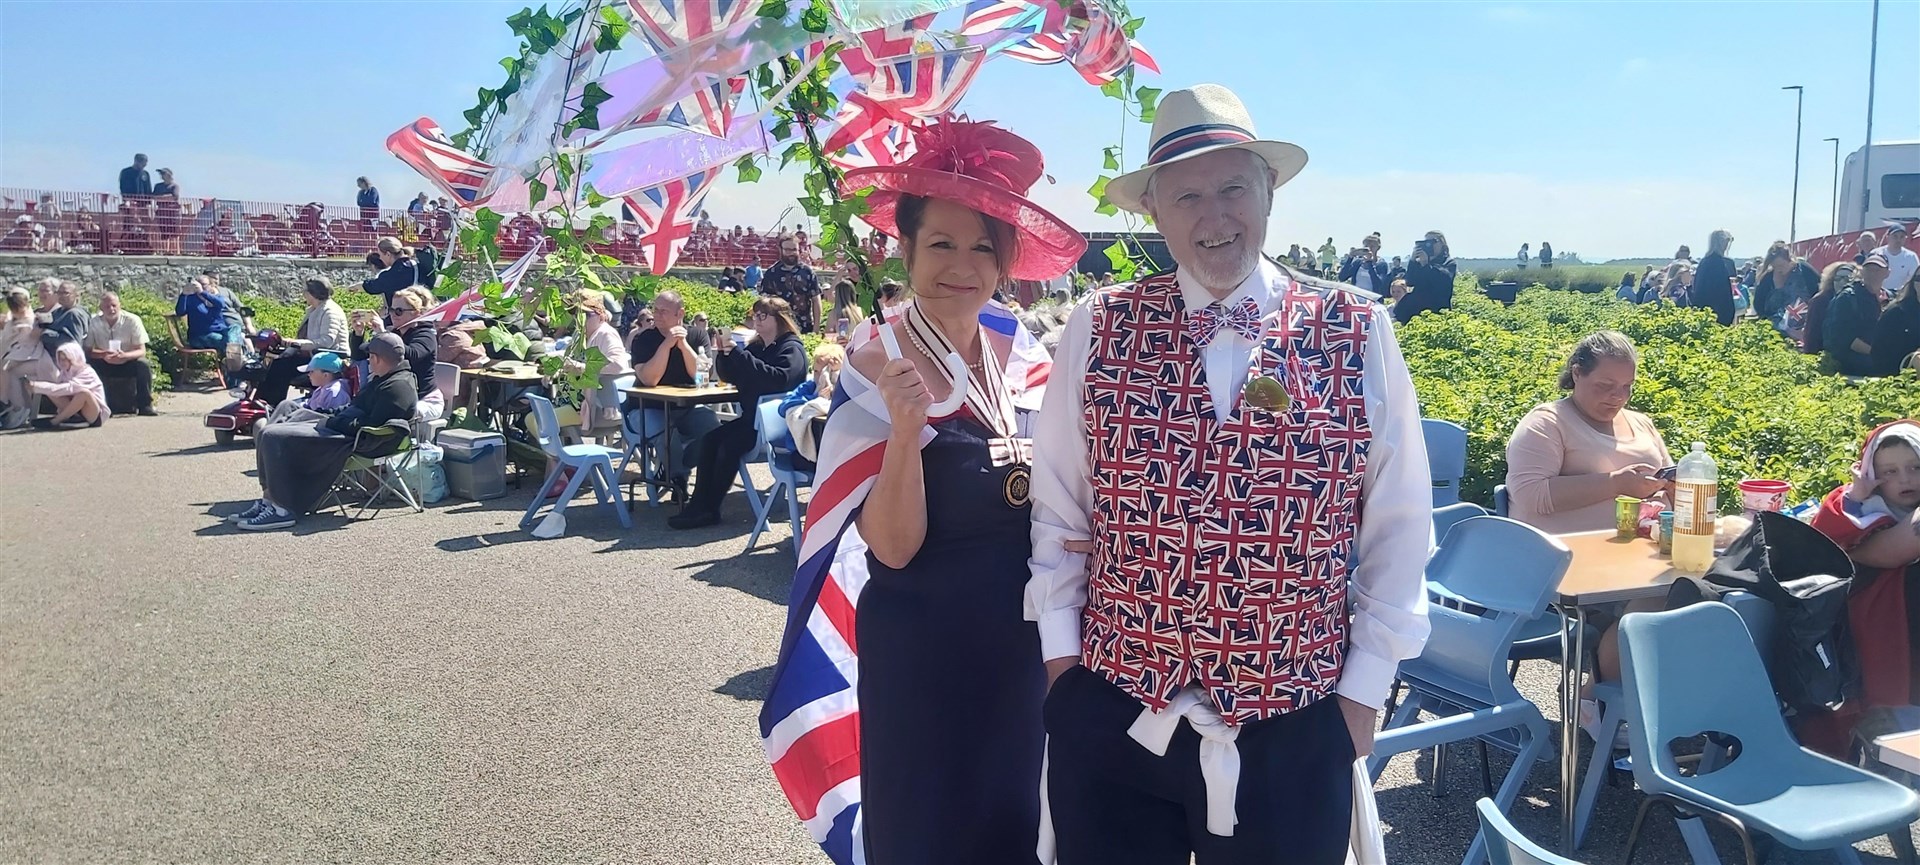 Joan Cowe, depute lieutentant of Moray and husband John Cowe, a local councillor, get patriotic at the community picnic.